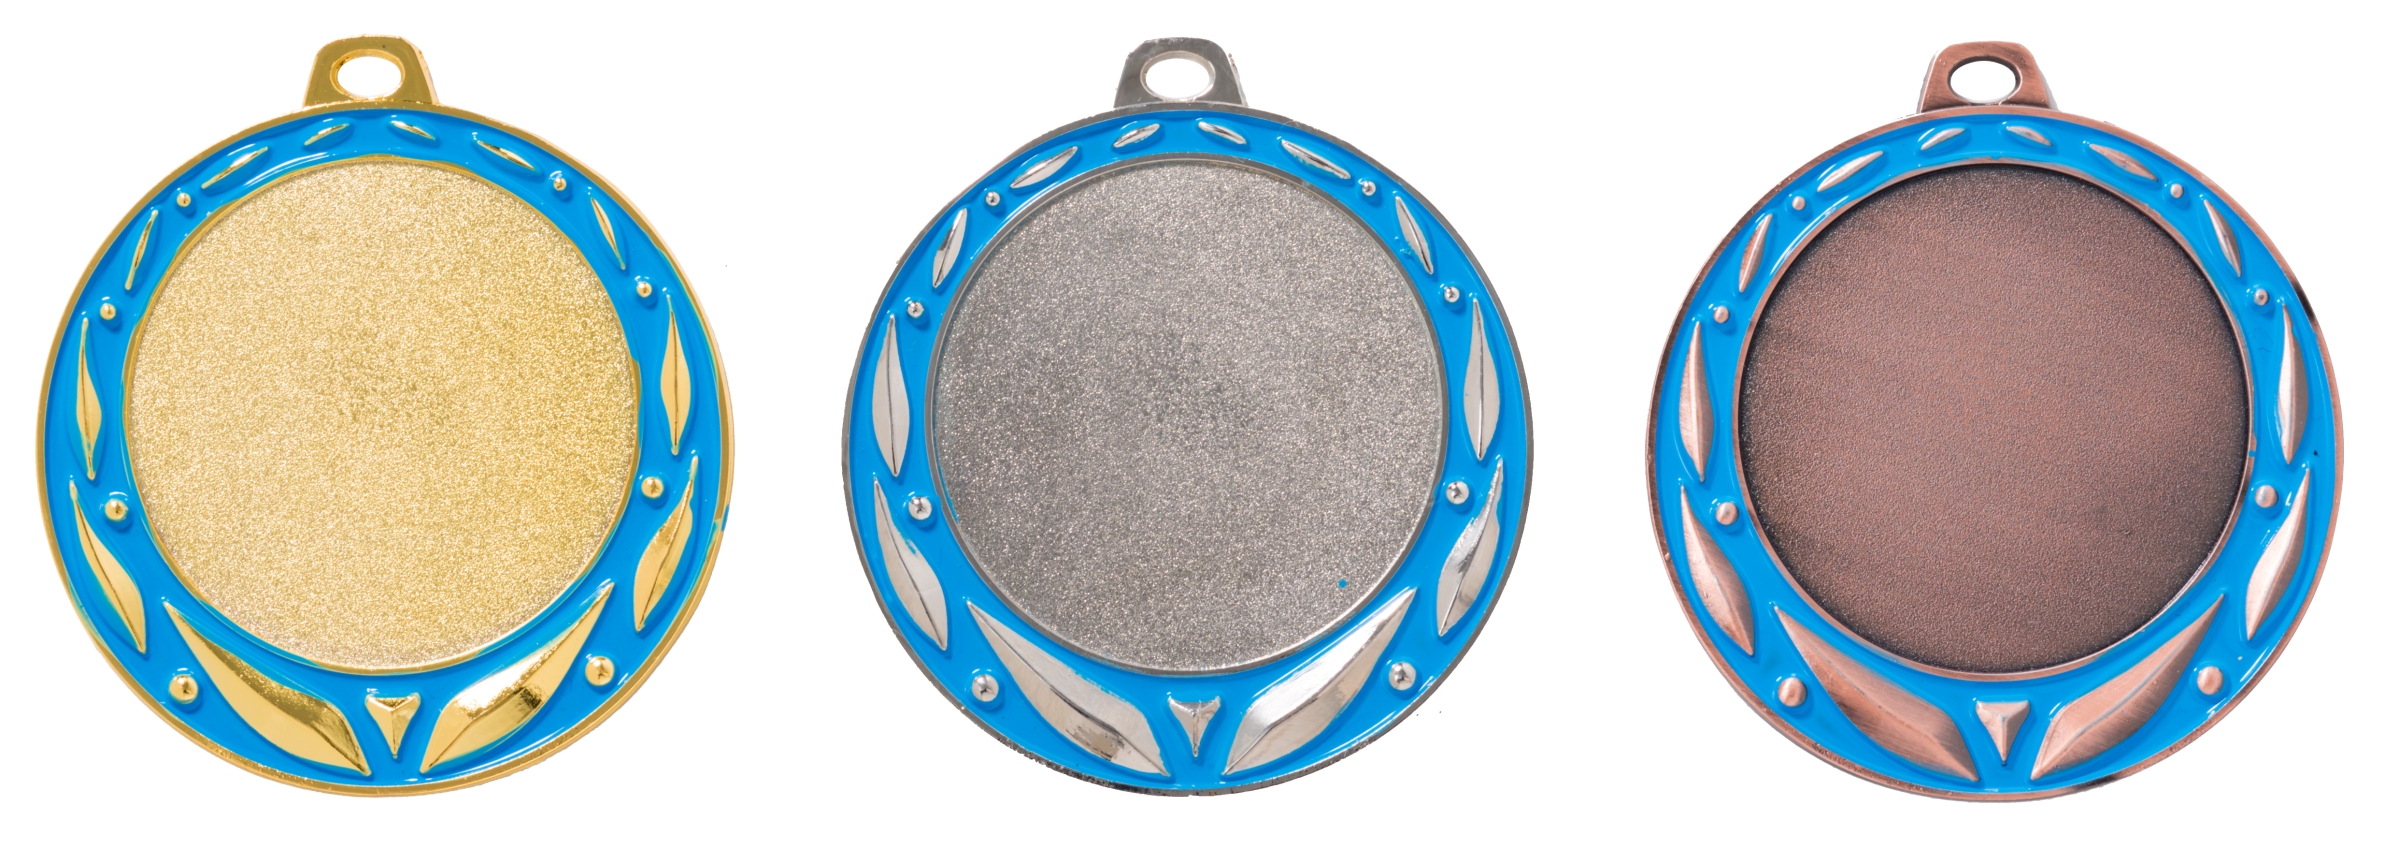 Zamak Medaille/Blau 70mm Lieferbar in Gold-Silber - Bronze